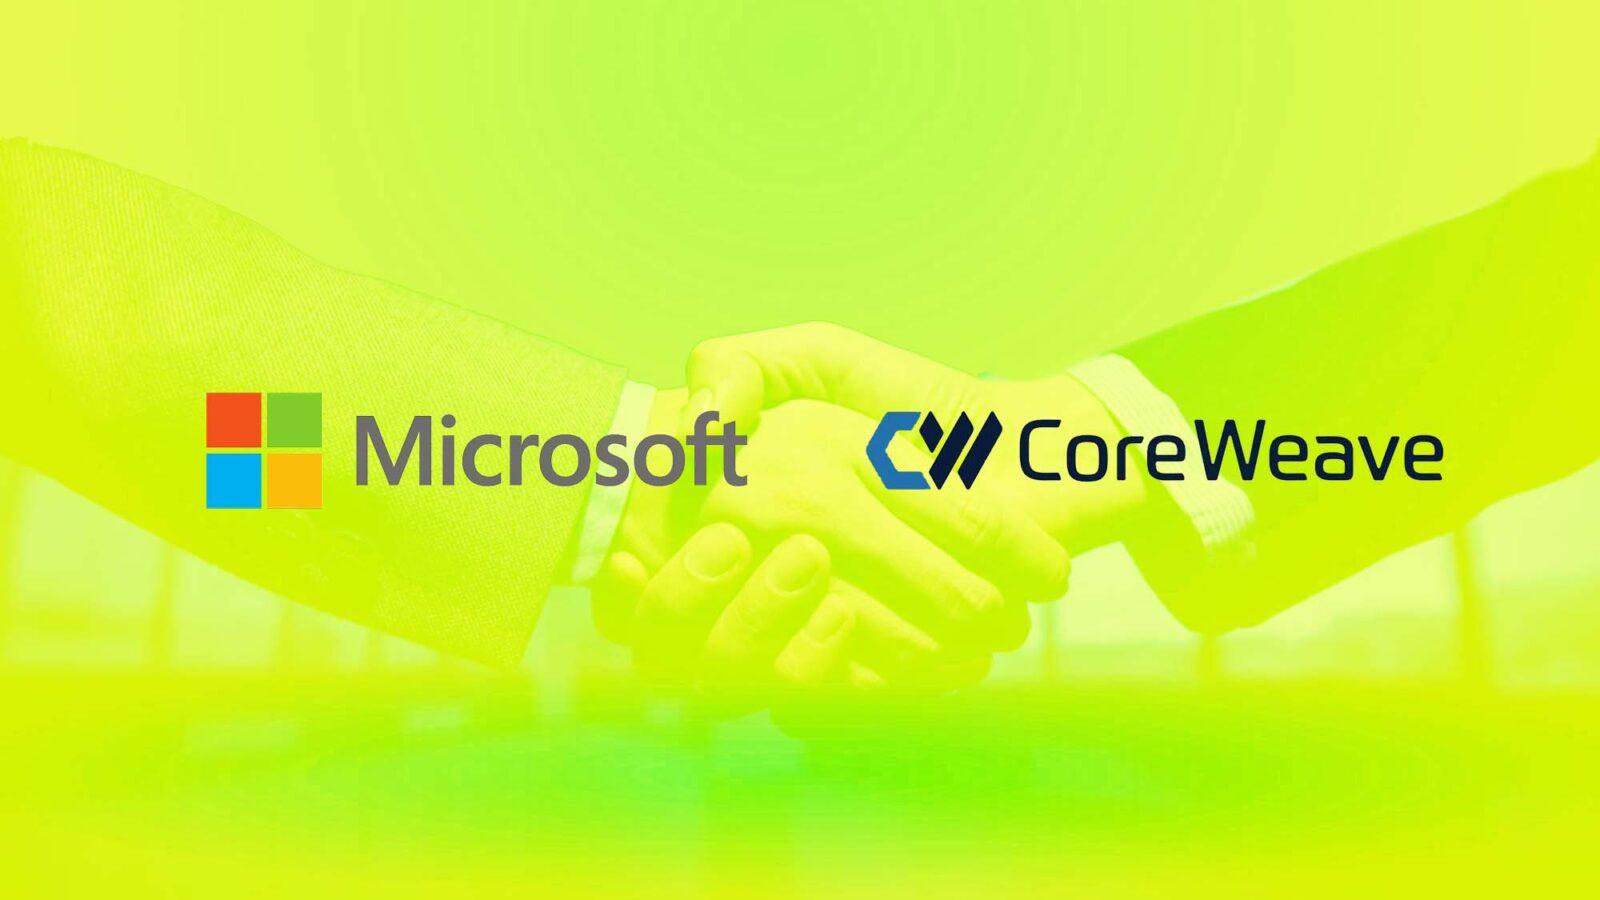 microsoft - coreweave - cooperation - همکاری مایکروسافت و کورویو